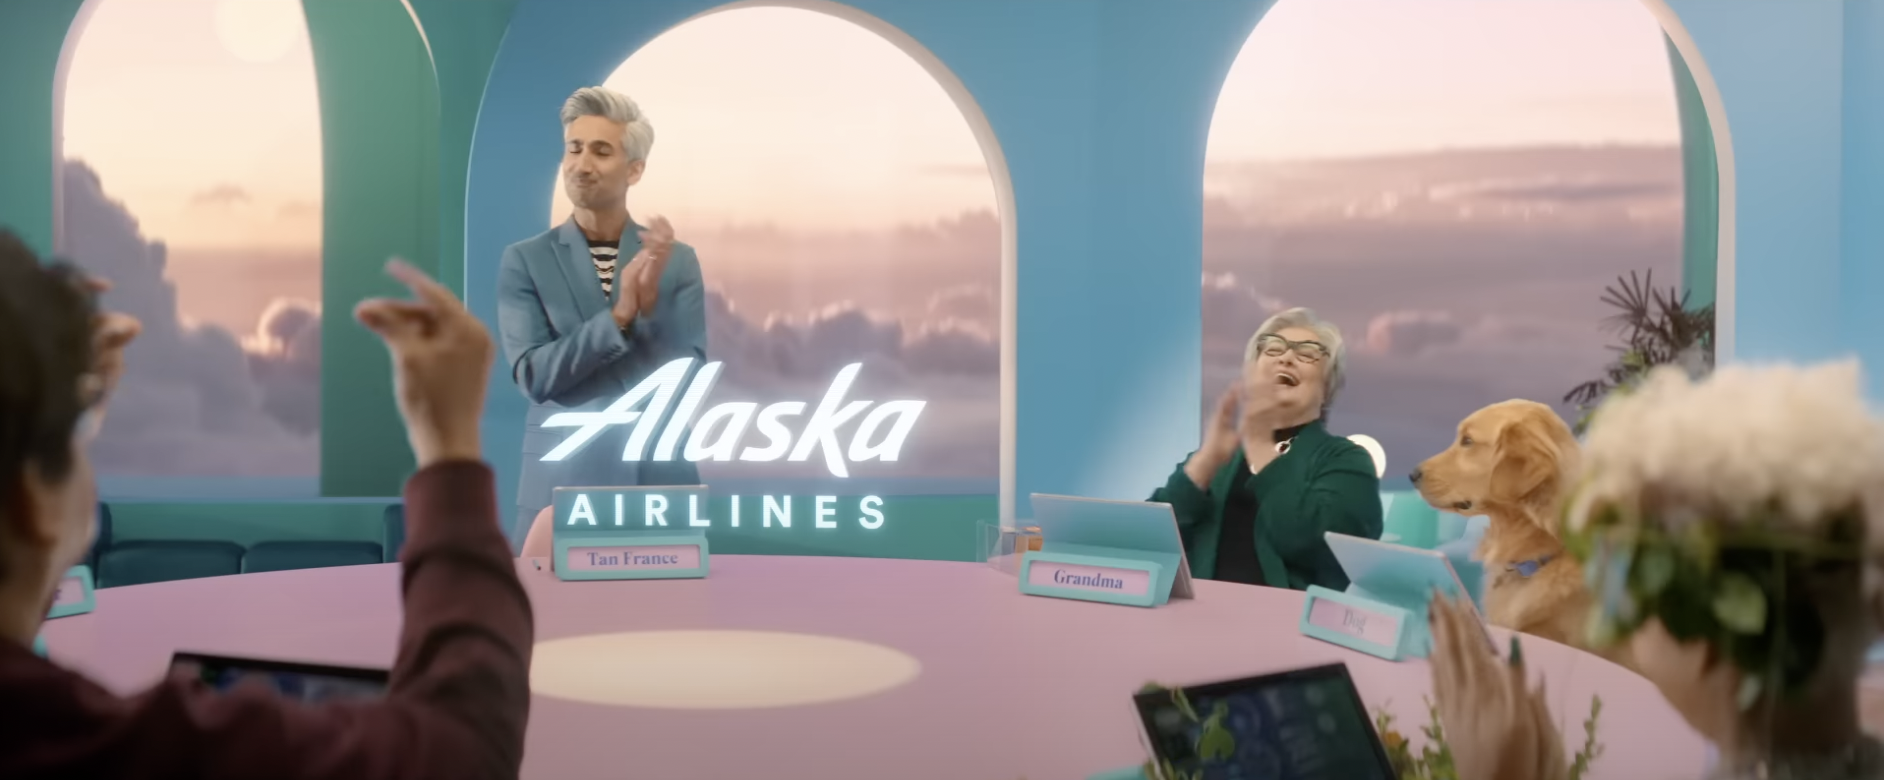 Alaska Airlines ad